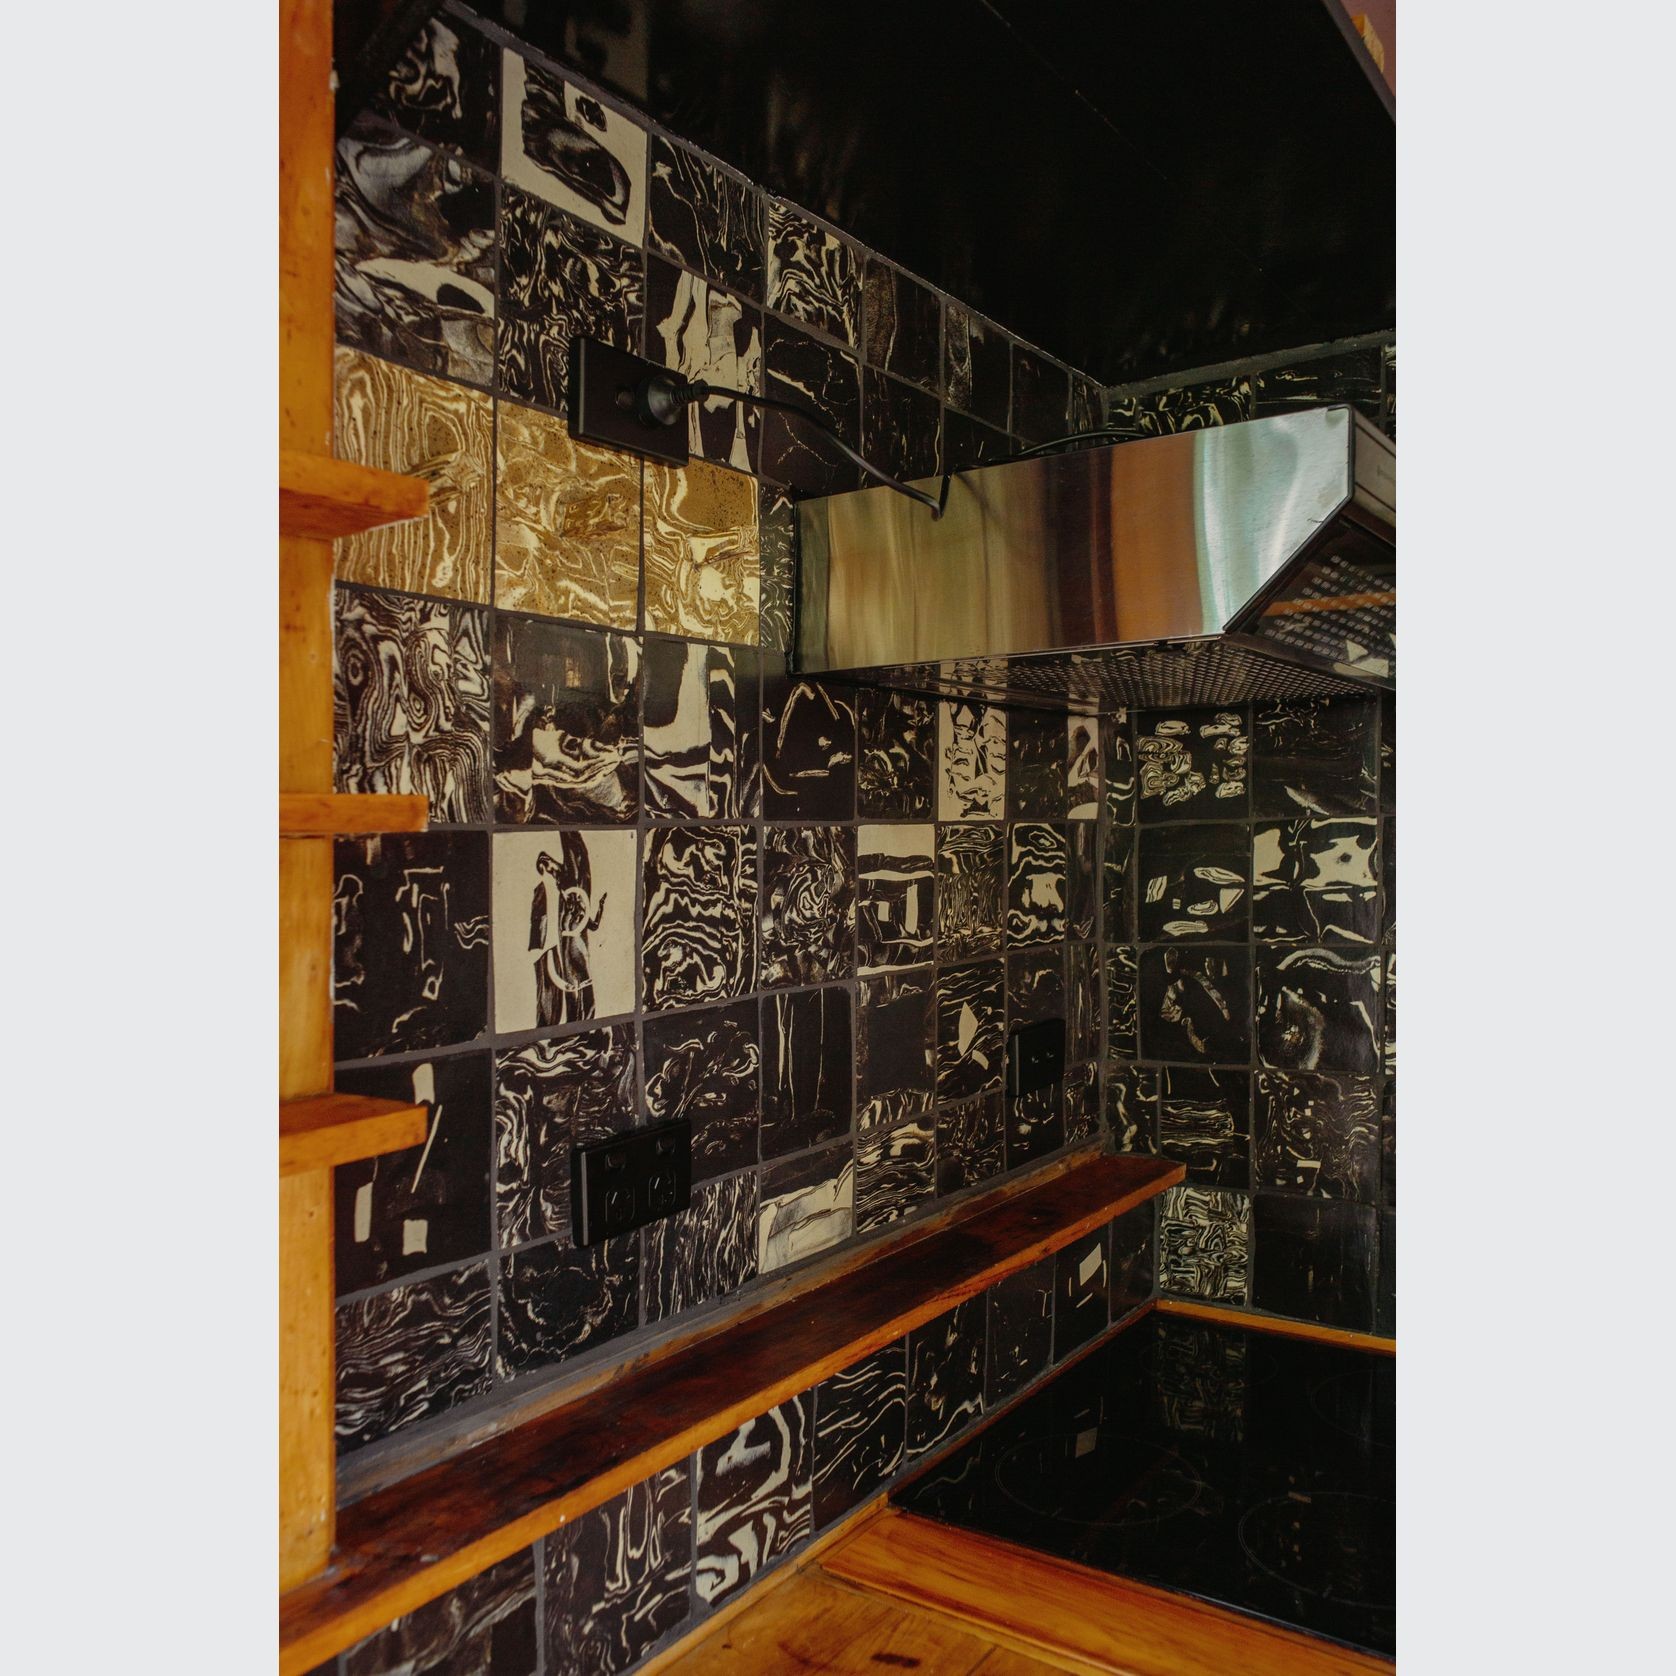 Studio Lucy Mcmillan | Bespoke tiles gallery detail image